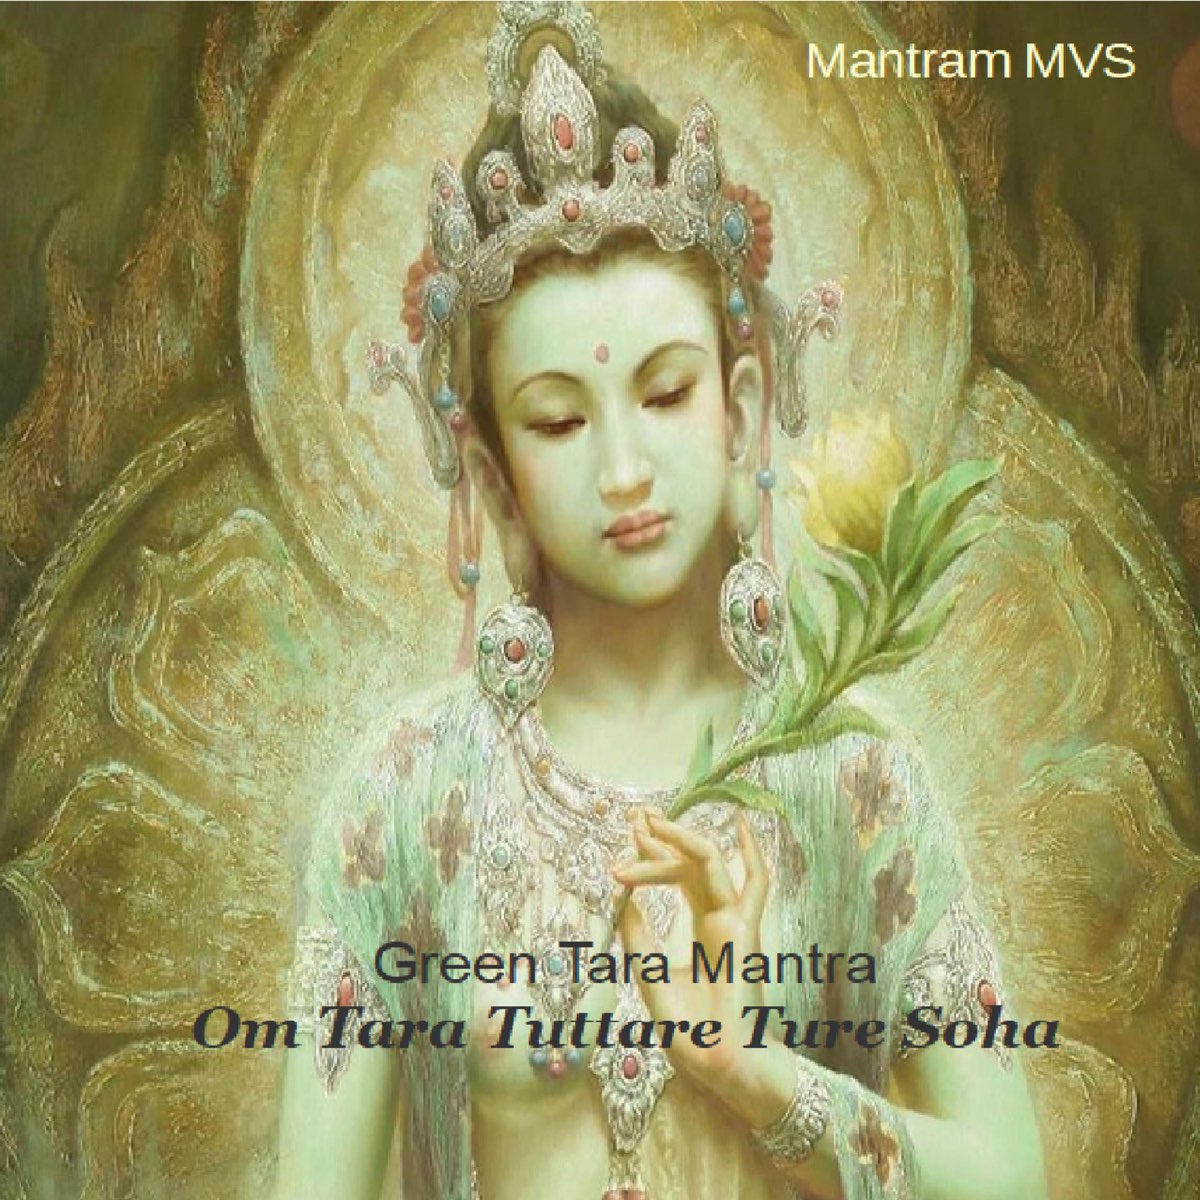 Green Tara Mantra Chants (Om Tare Tuttare Ture Soha) - EP by Mantram MVS on  Apple Music